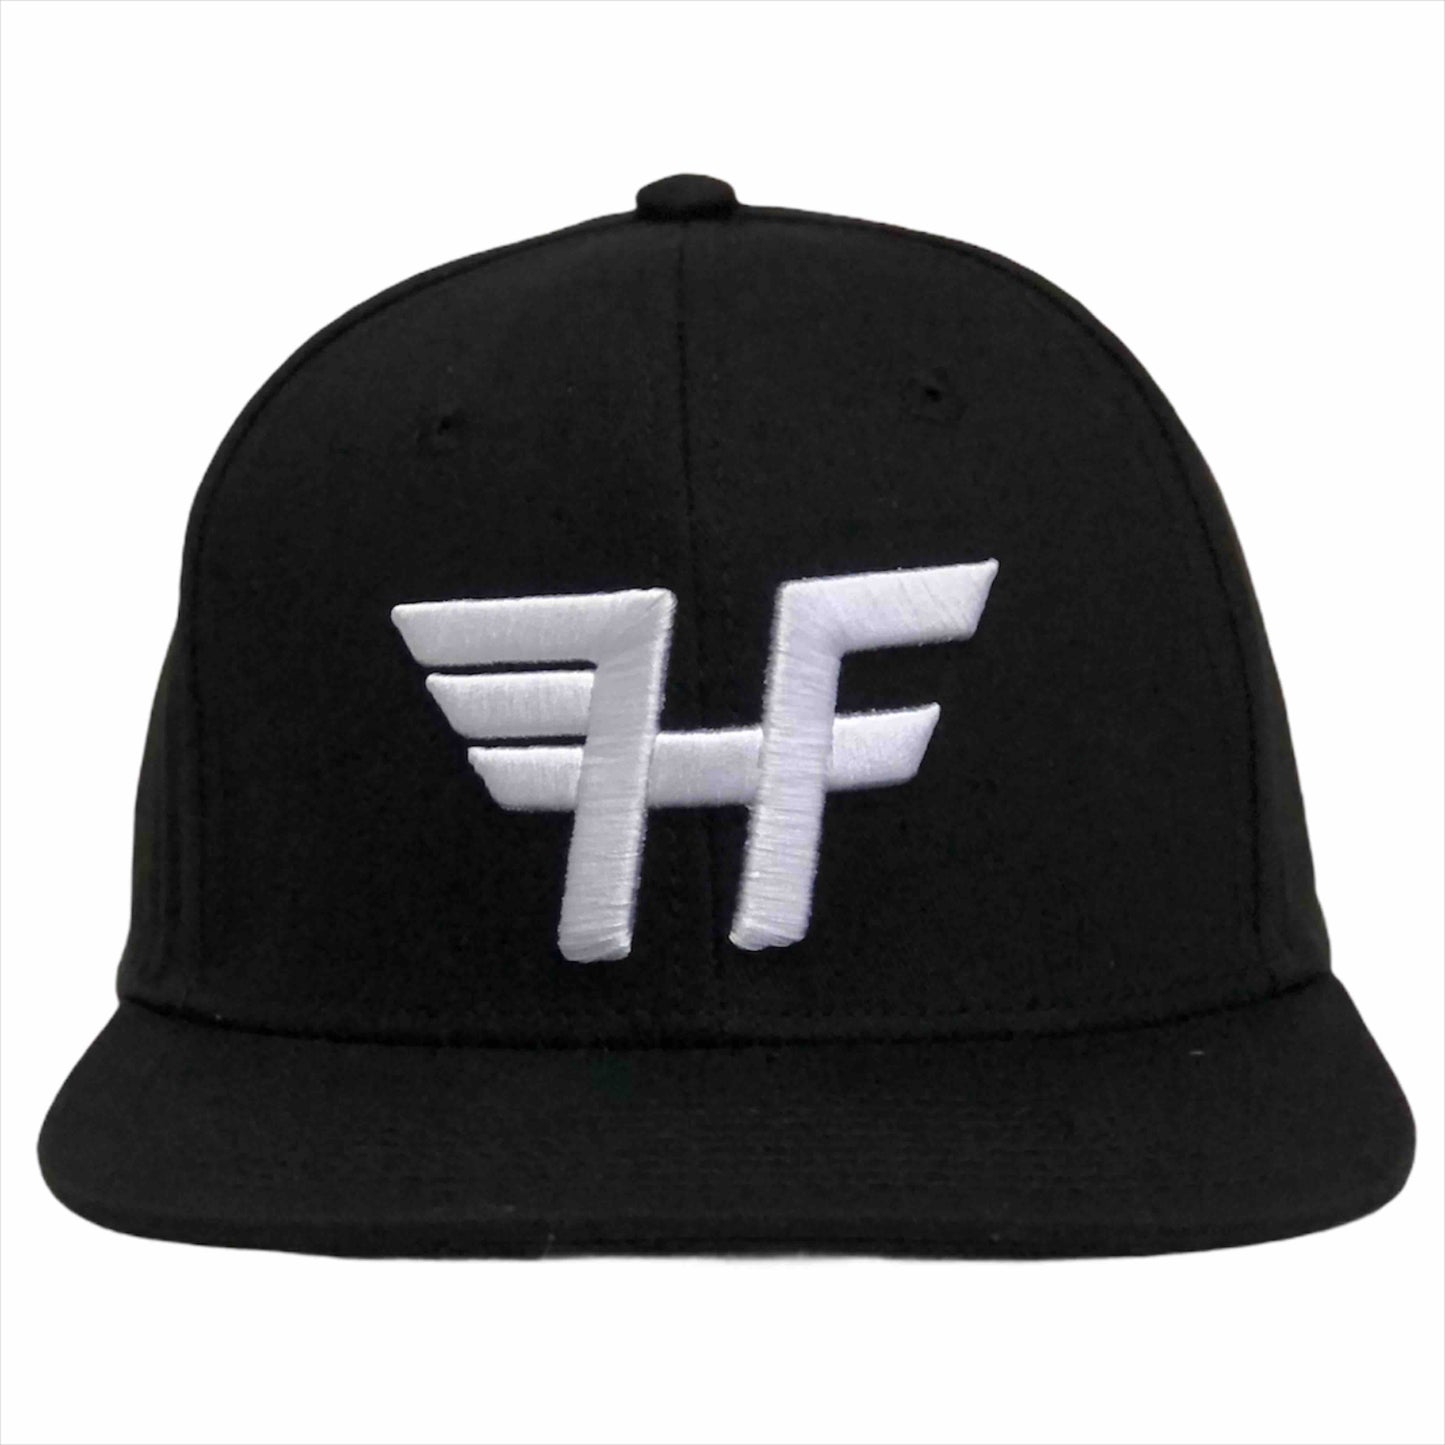 Holyfreedom Icon Cap - Black